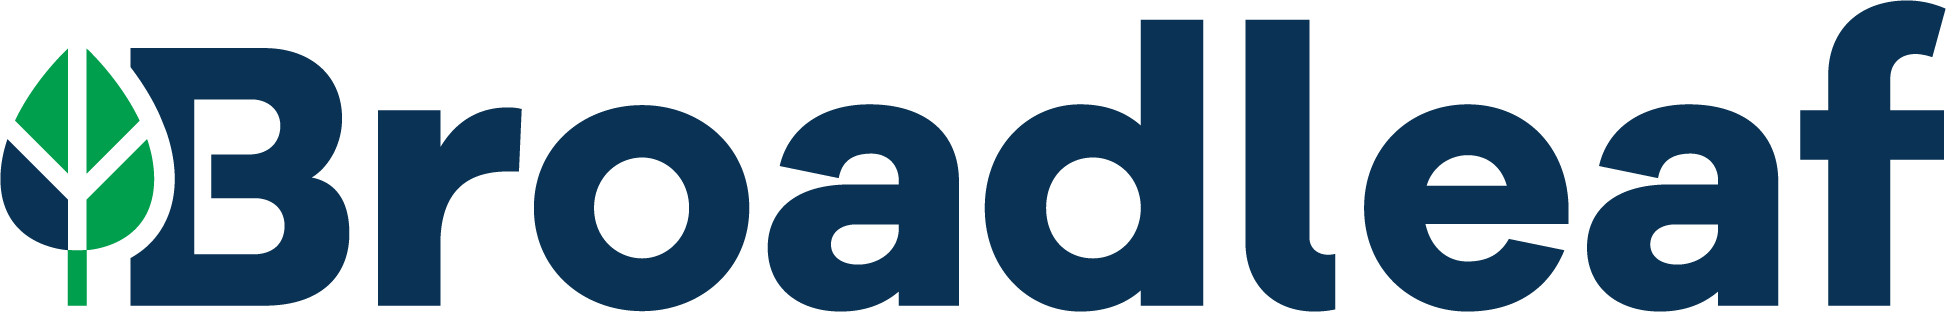 broadleaf logo